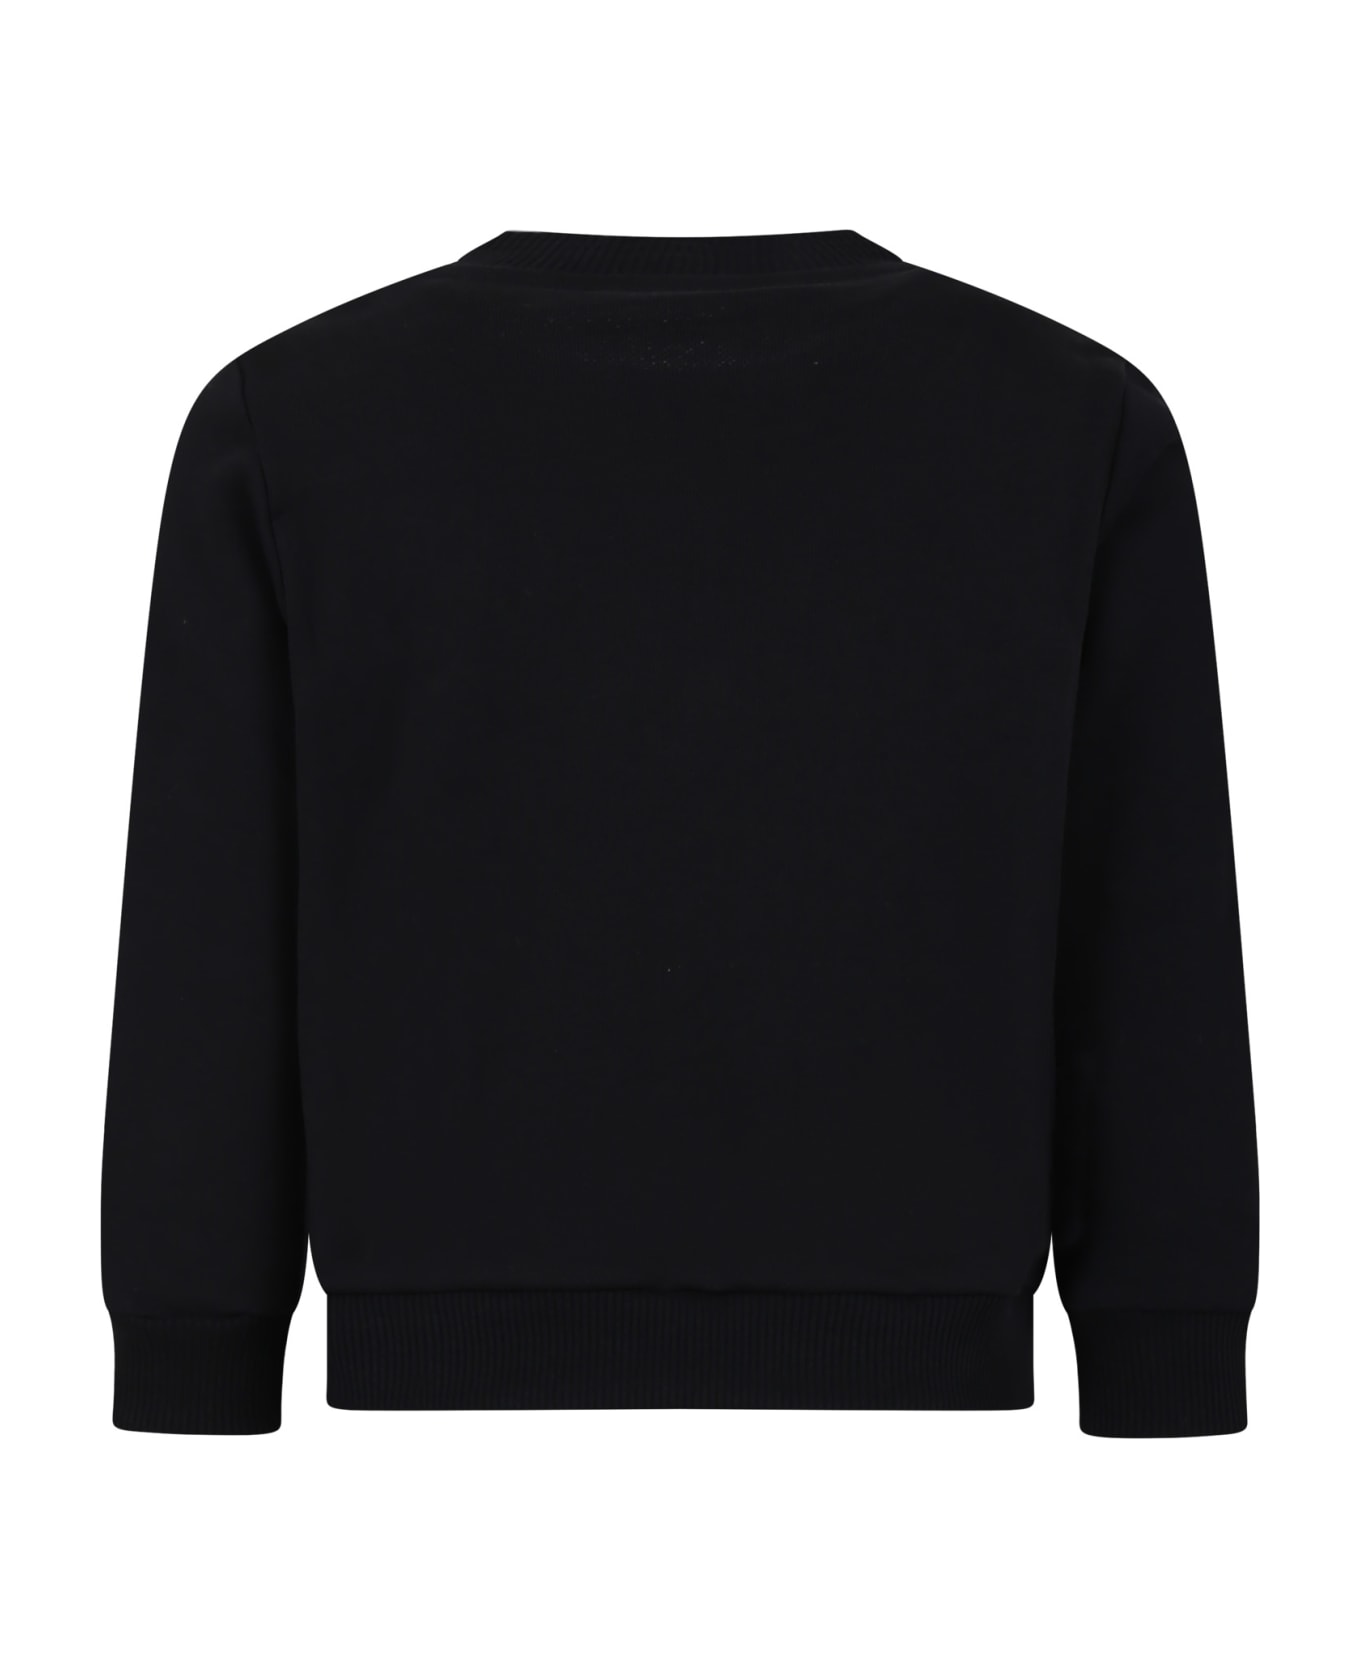 Balmain Black Sweatshirt For Girl With Logo - Black/white